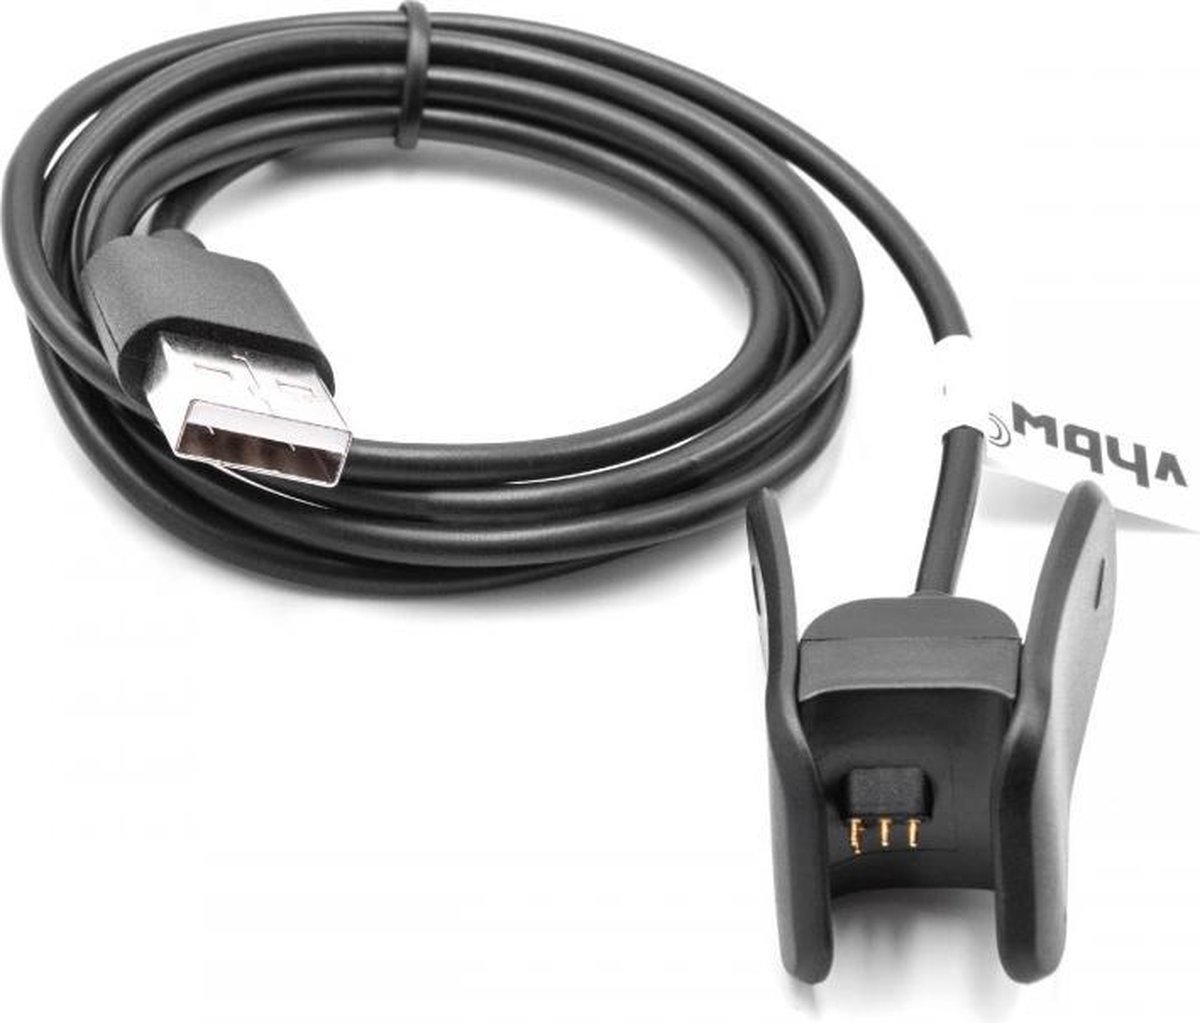 USB kabel voor Garmin Vivosmart 4 - 1 meter | bol.com